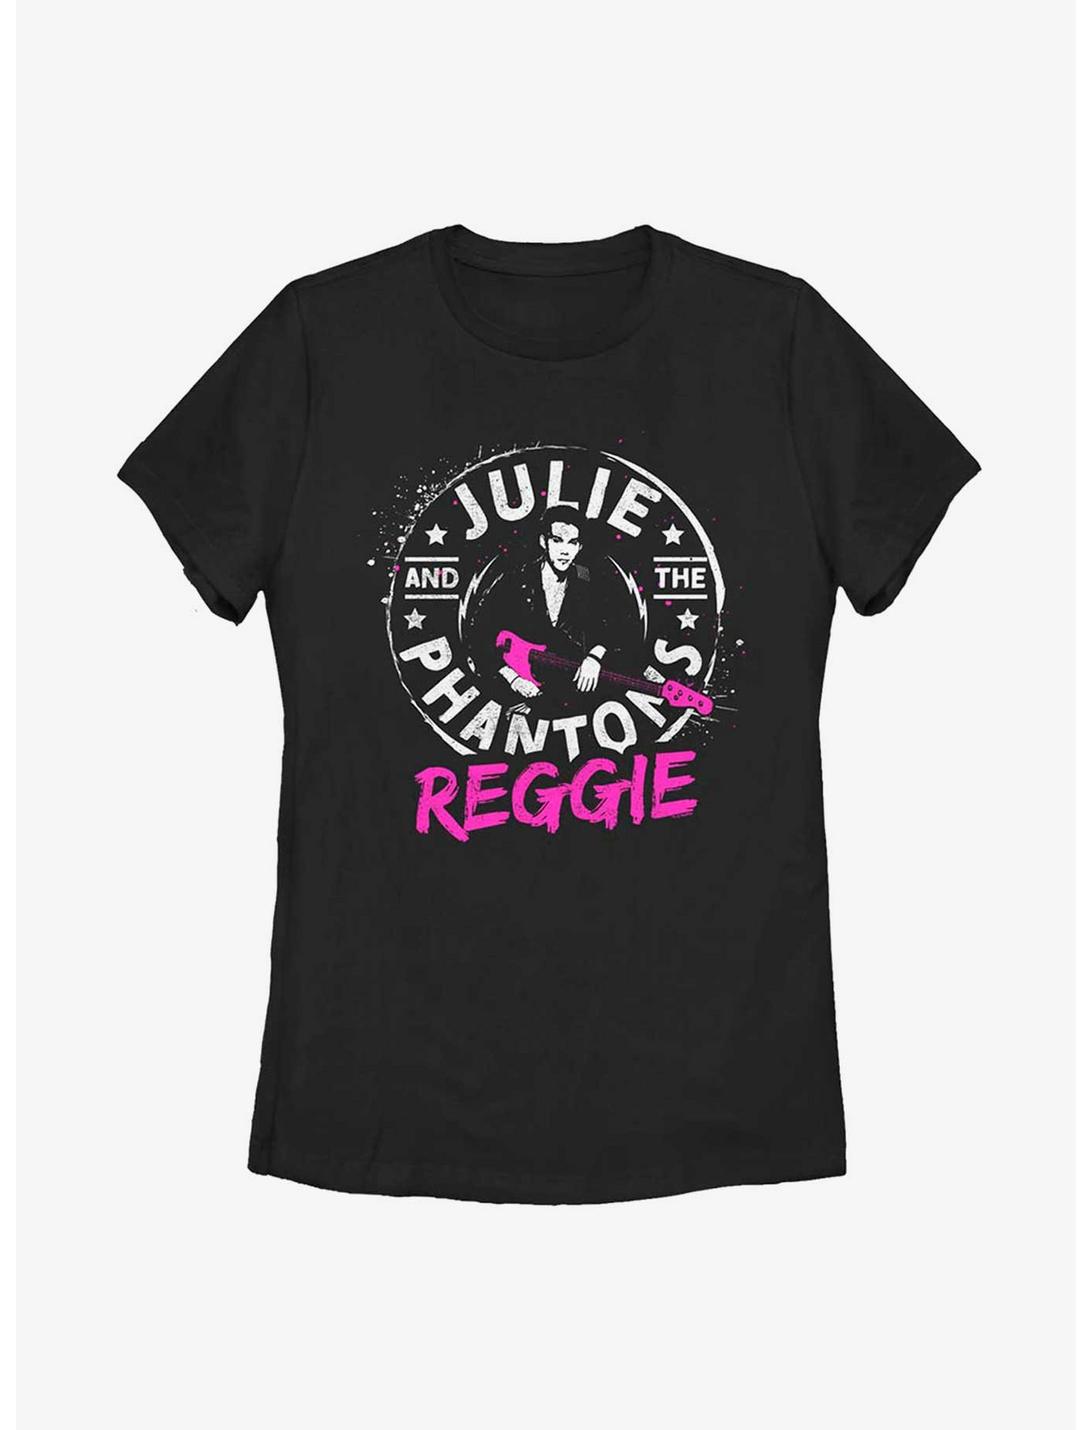 Julie And The Phantoms Reggie Grunge Womens T-Shirt, BLACK, hi-res